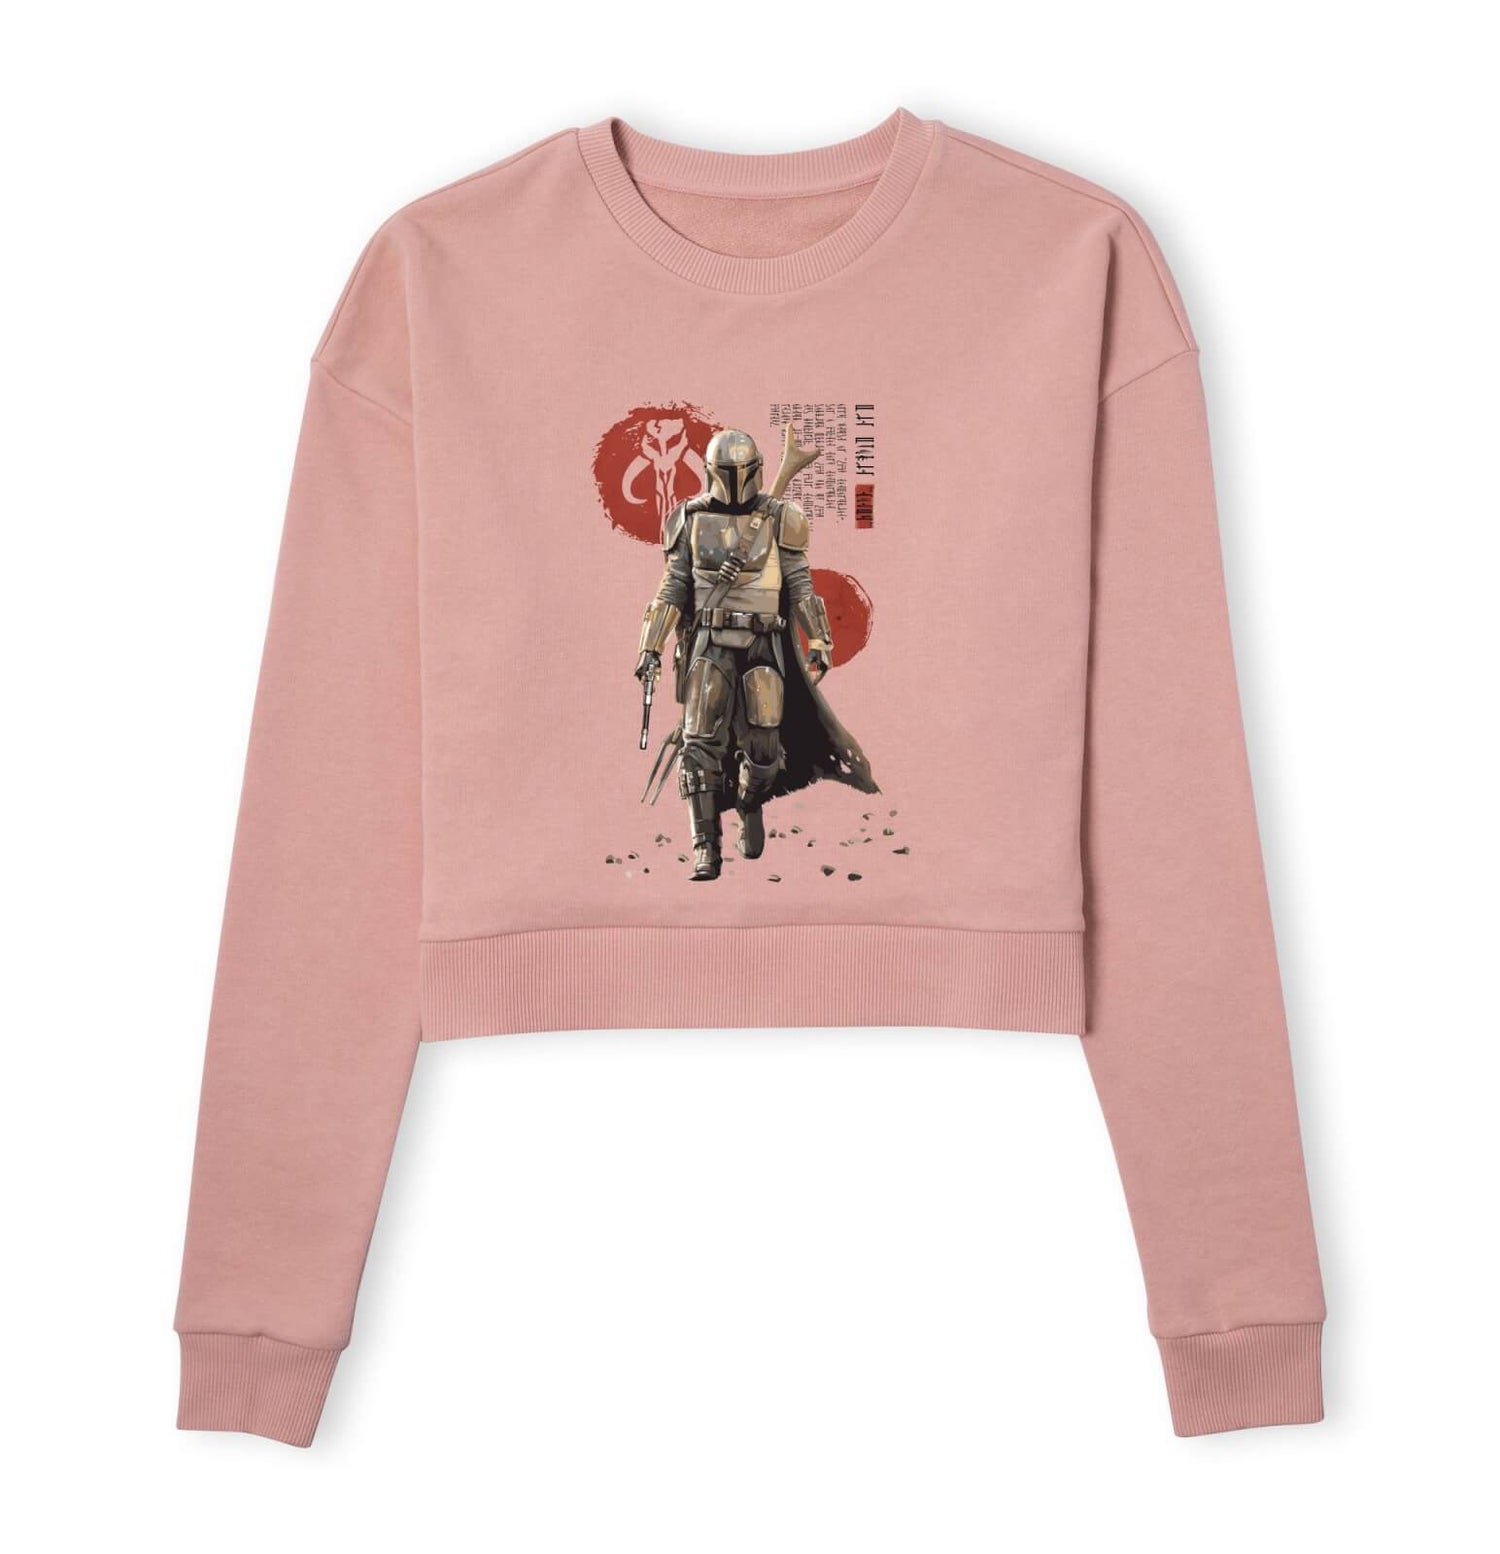 Star Wars The Mandalorian Mando'a Script Women's Cropped Sweatshirt - Dusty Pink